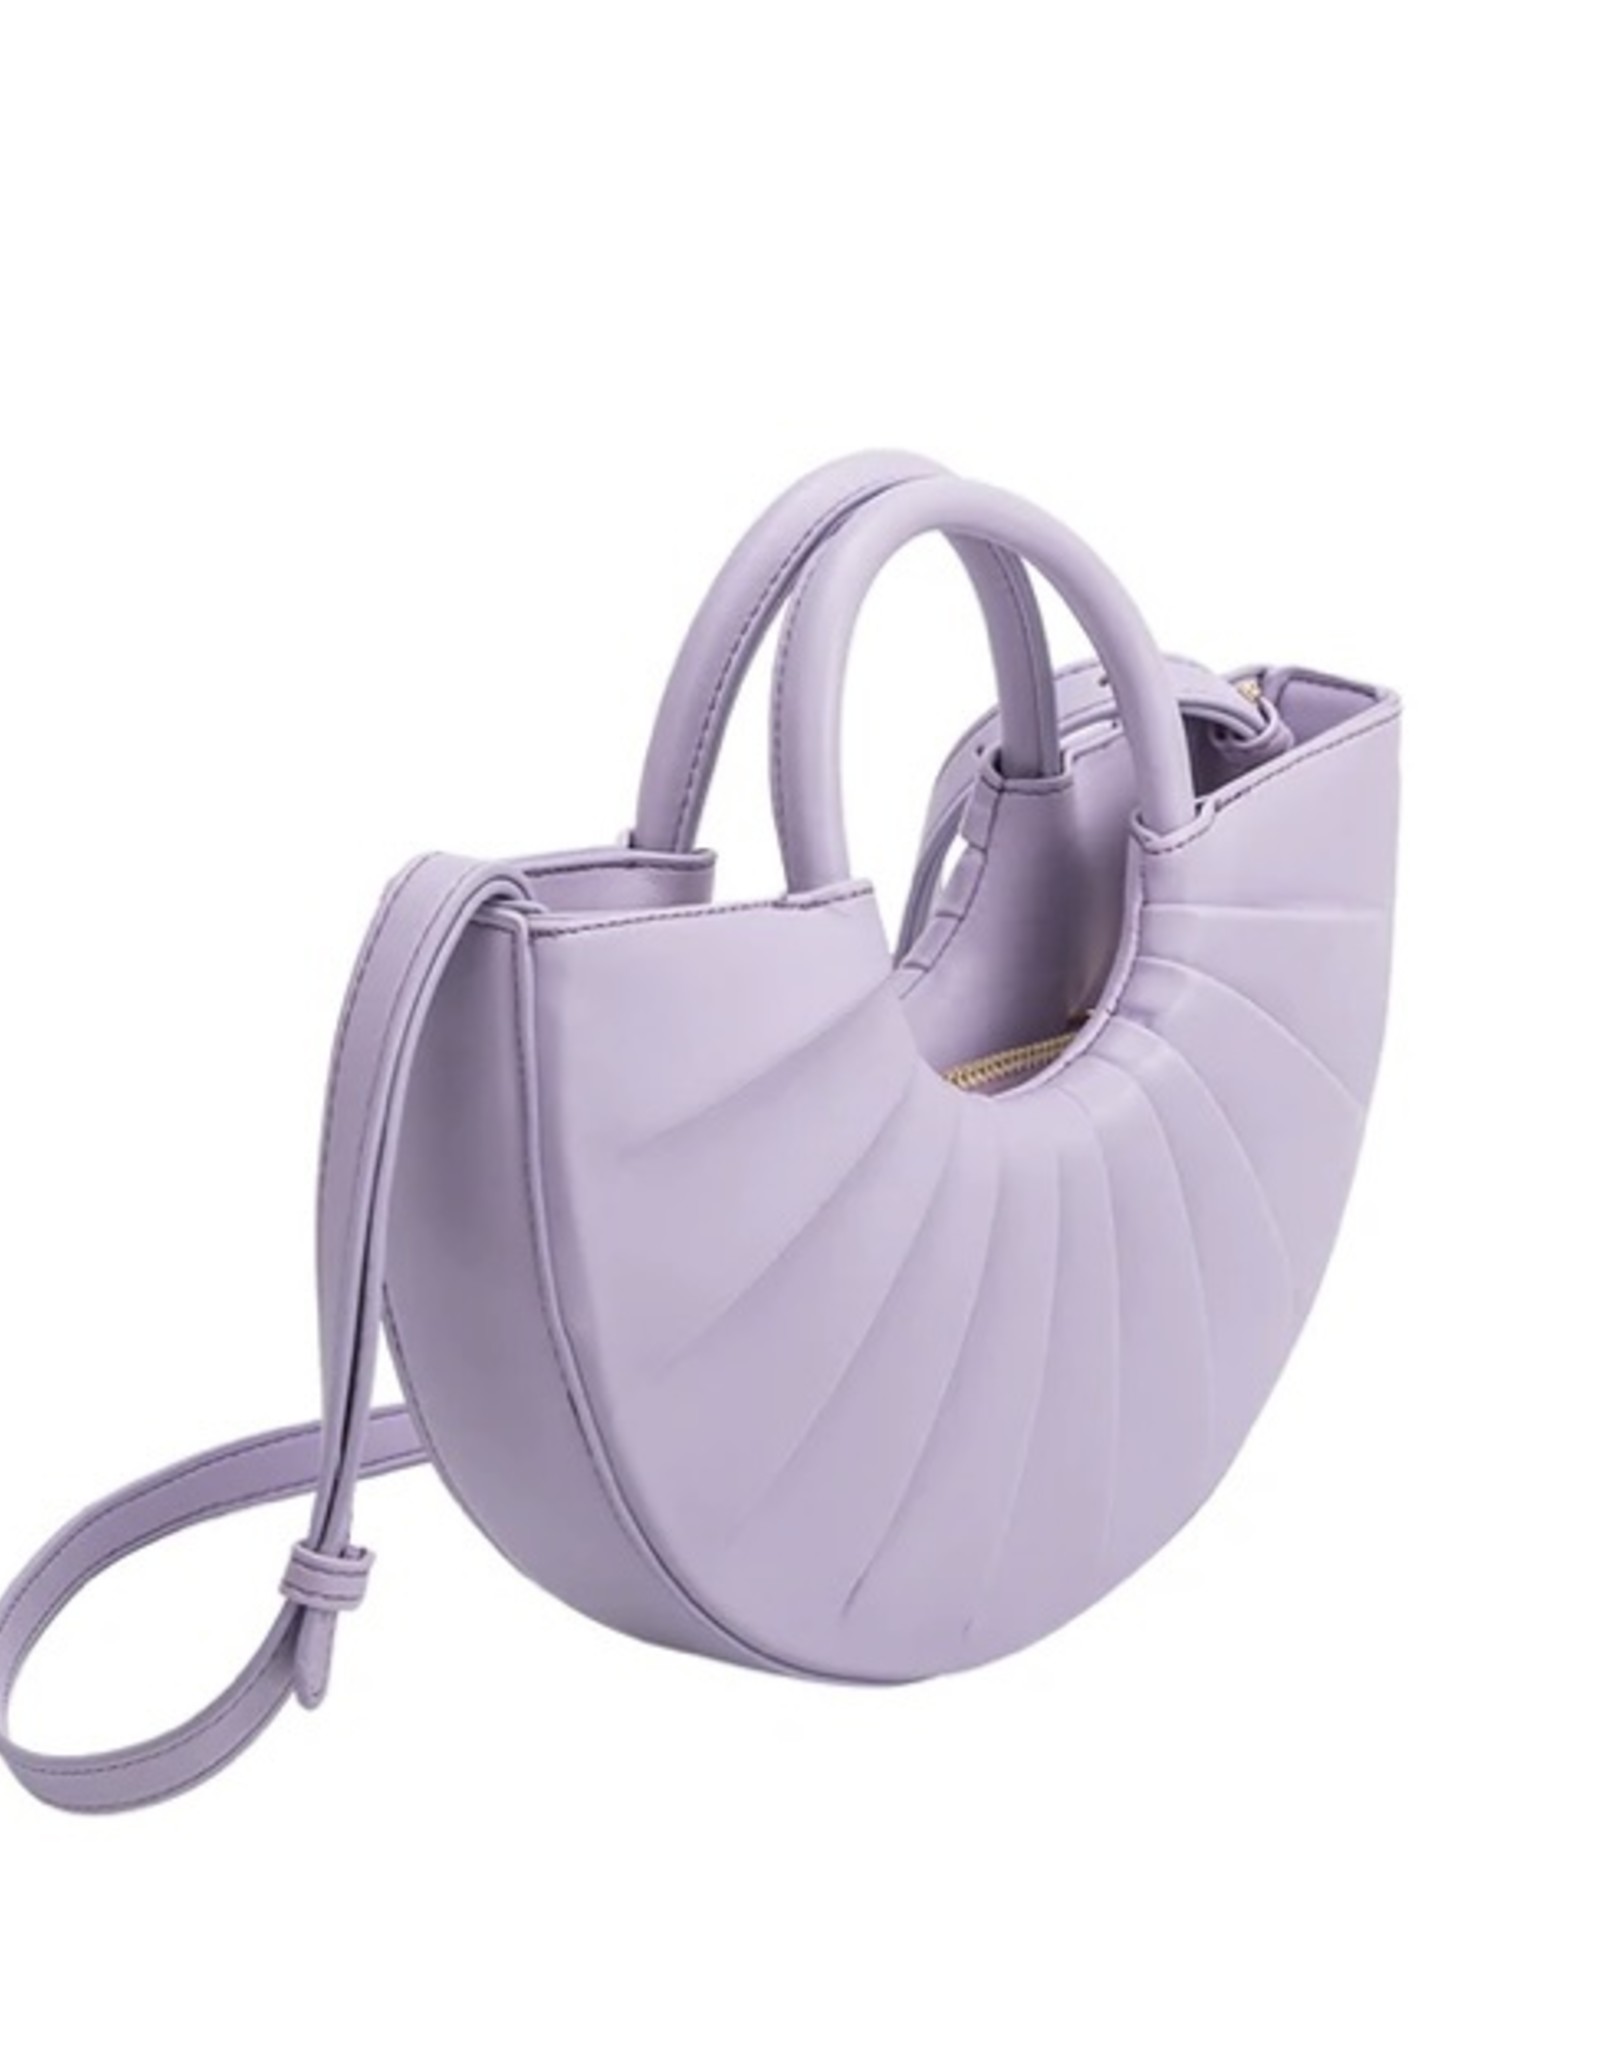 Melie Bianco Lilac Karlie Top Handle Bag